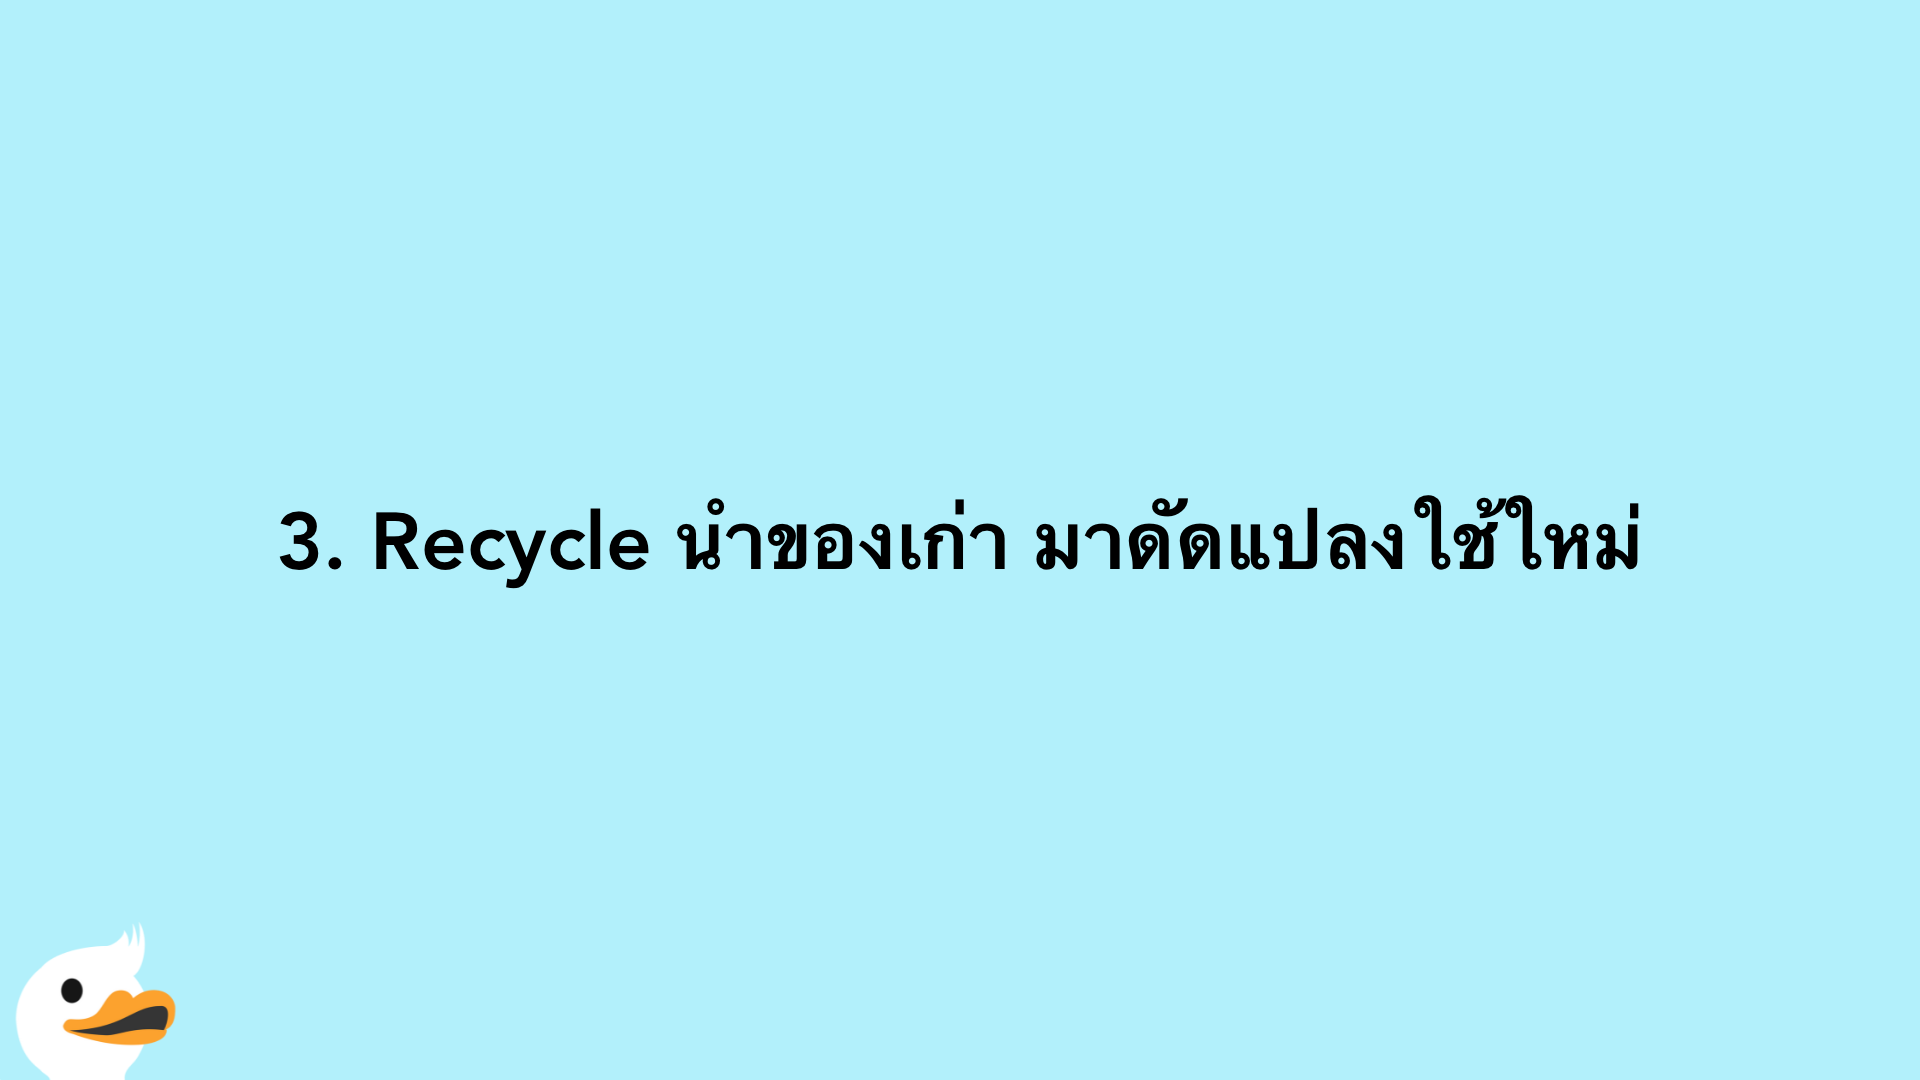 3. Recycle นำของเก่า มาดัดแปลงใช้ใหม่